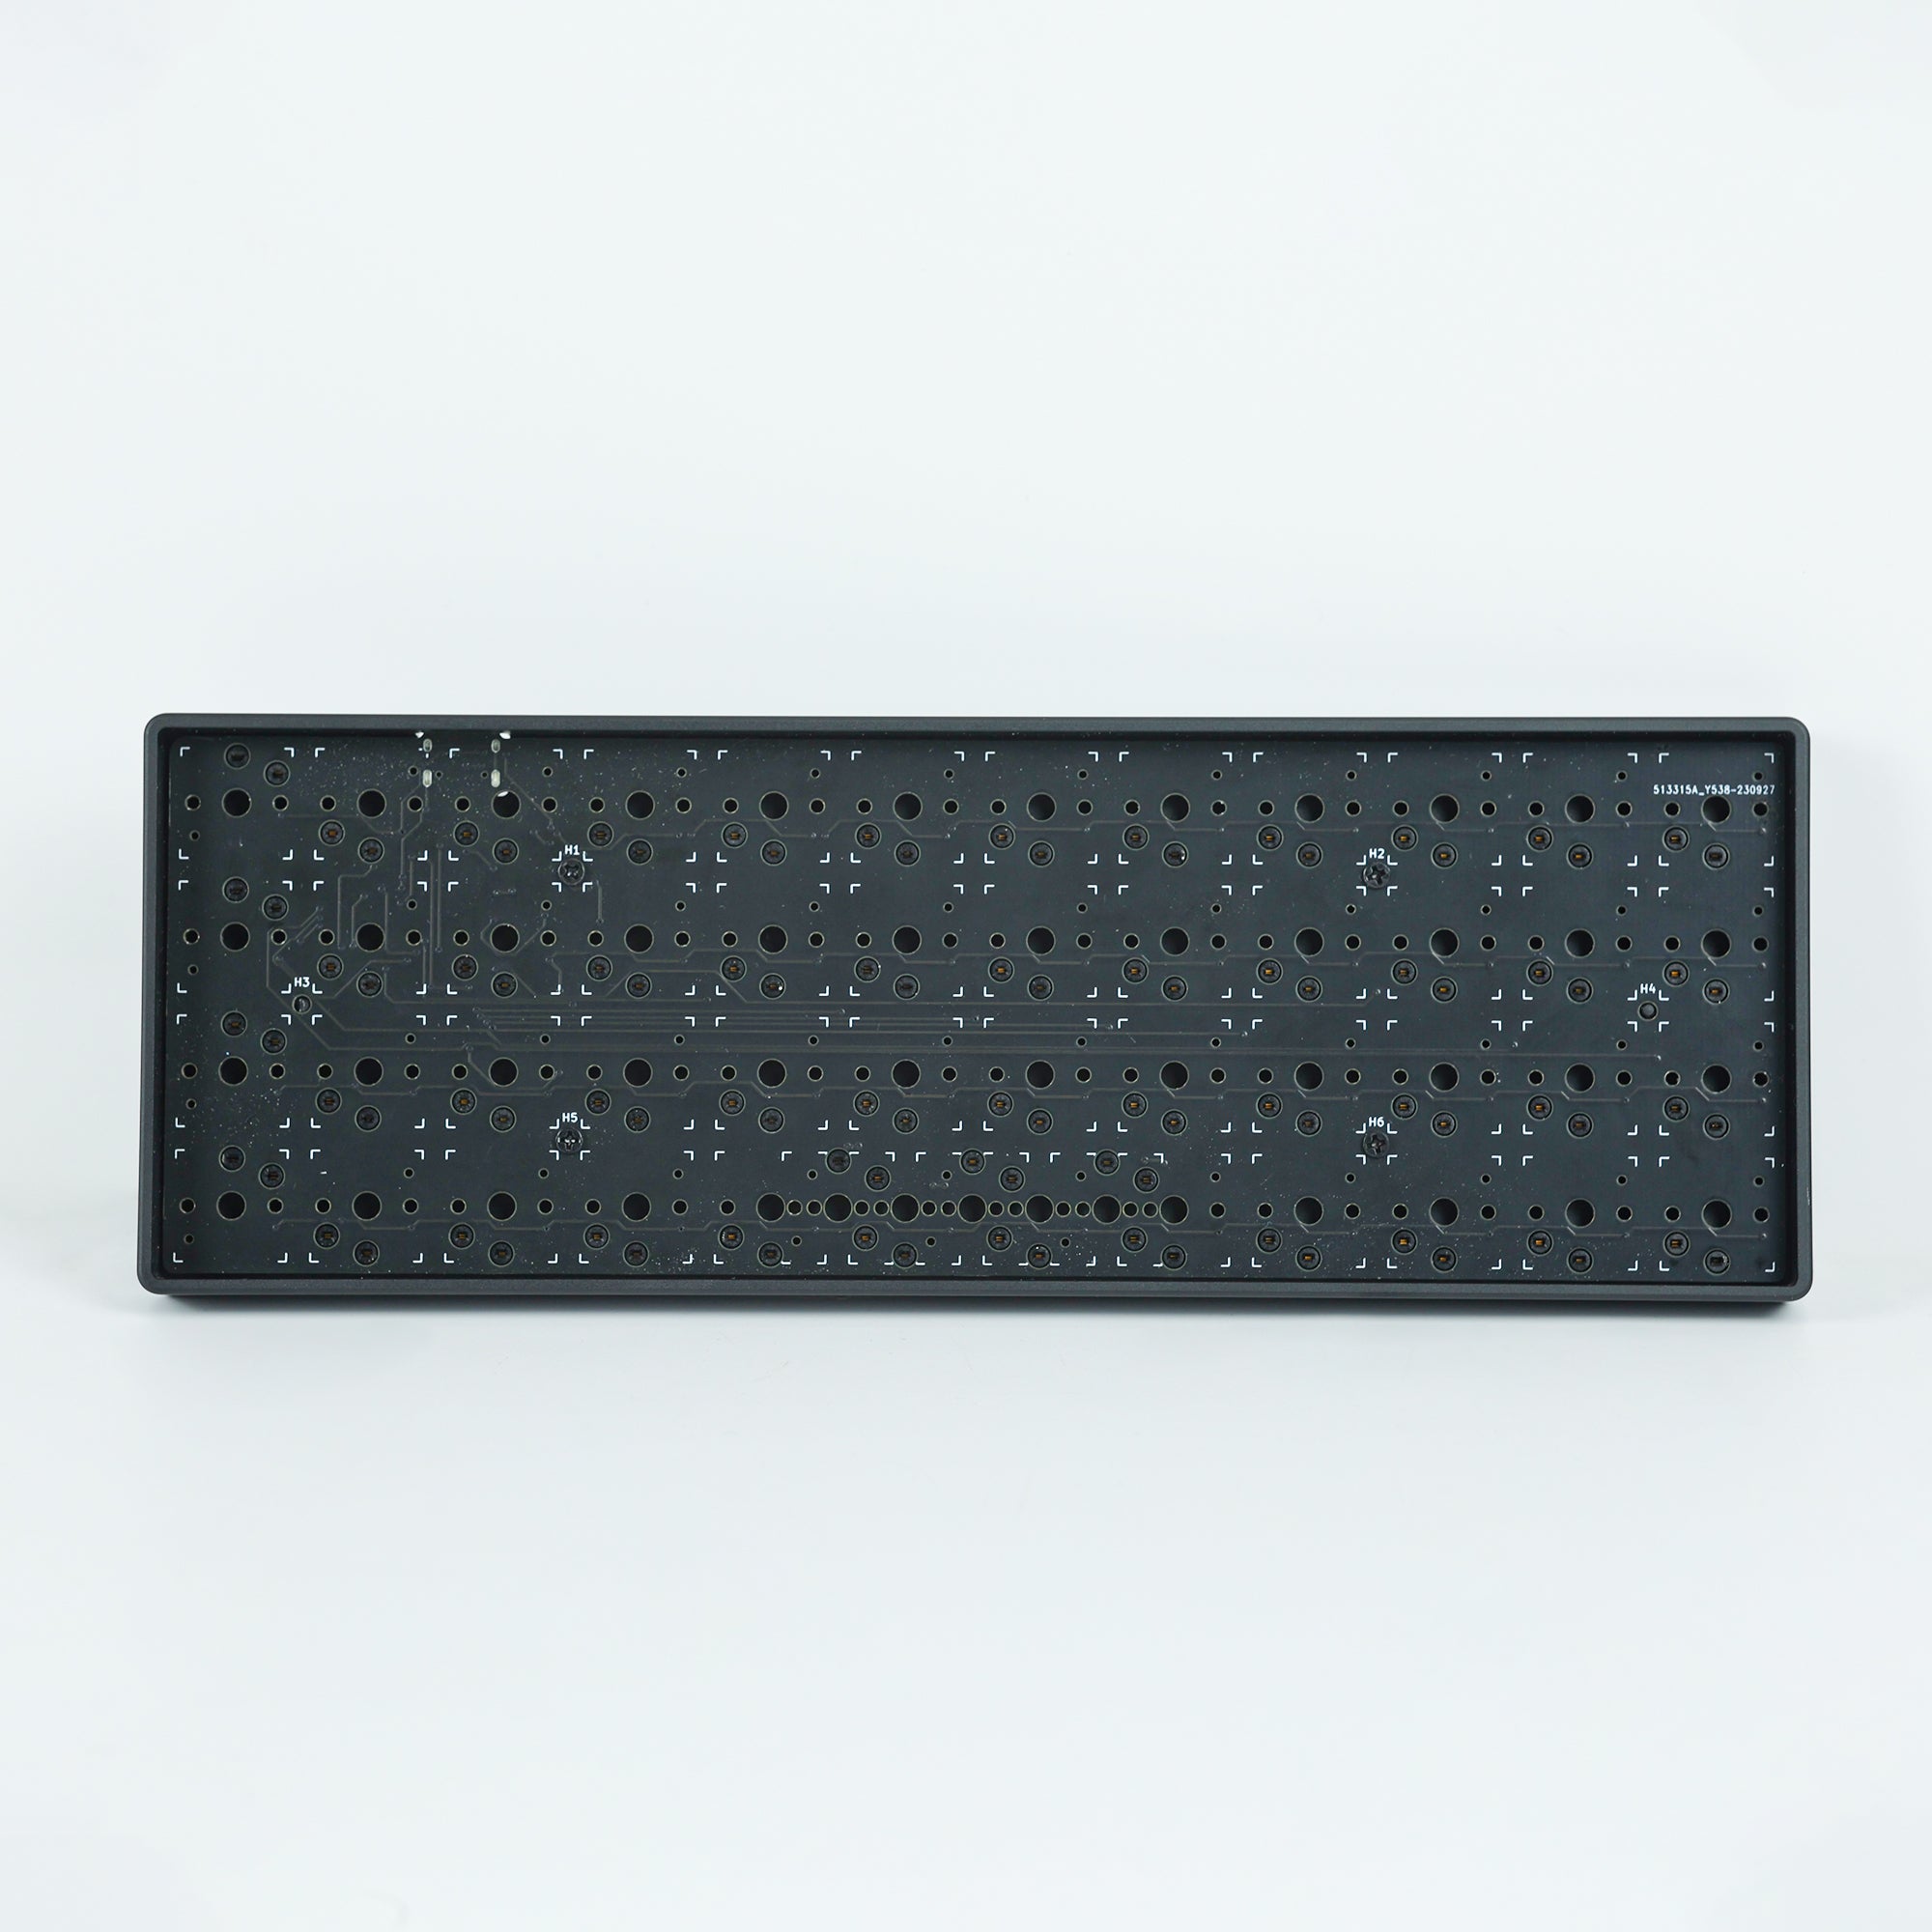 Chosfox® Custom Keyboard Kit: Uniquely Designed, Quality, Great Value